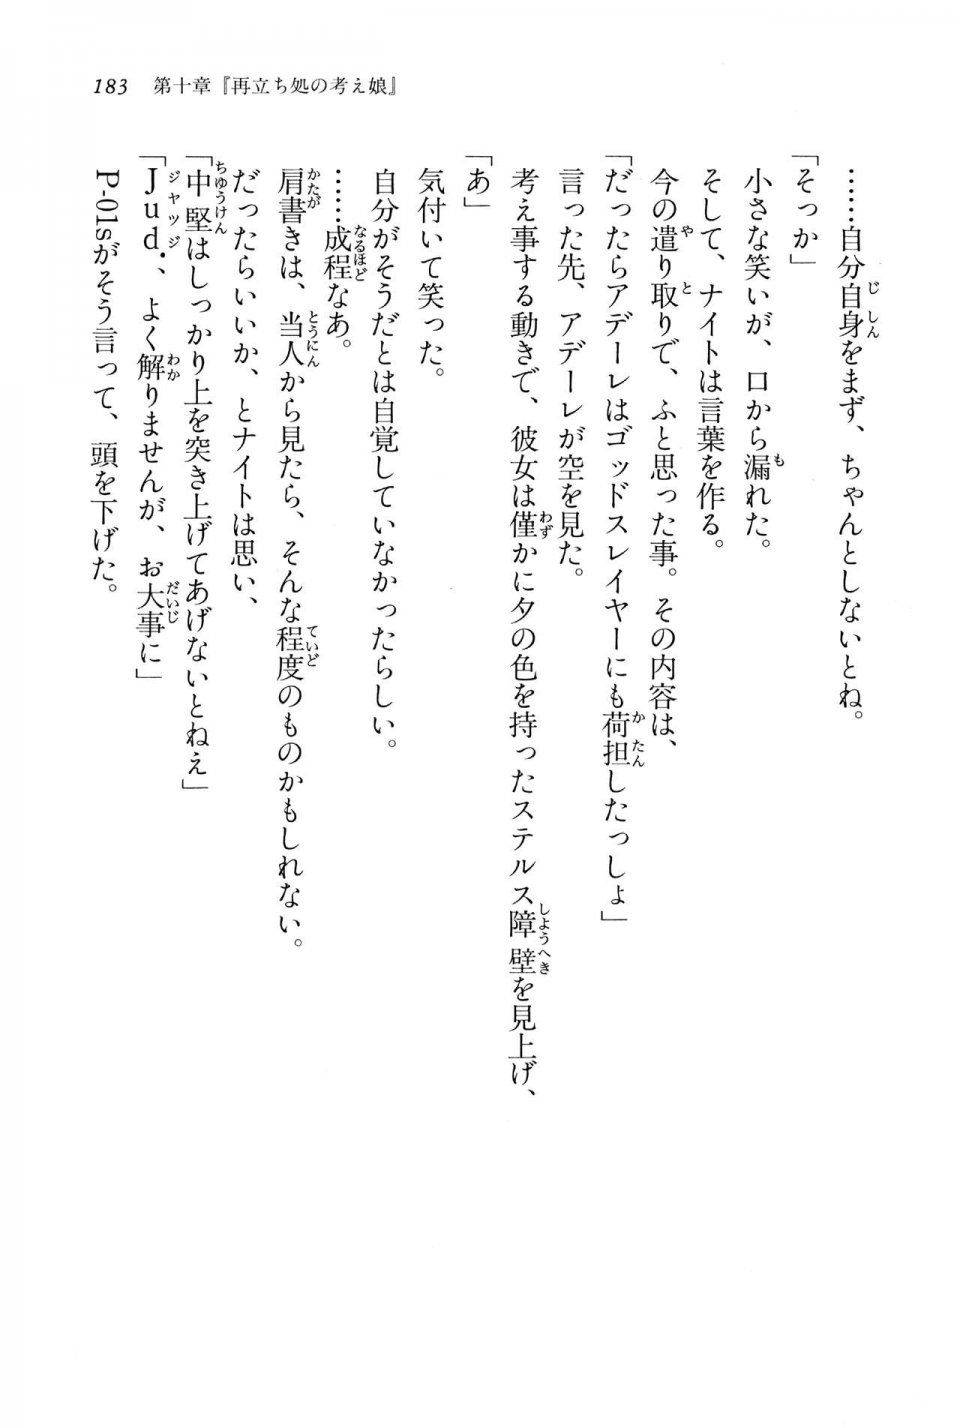 Kyoukai Senjou no Horizon BD Special Mininovel Vol 6(3B) - Photo #187